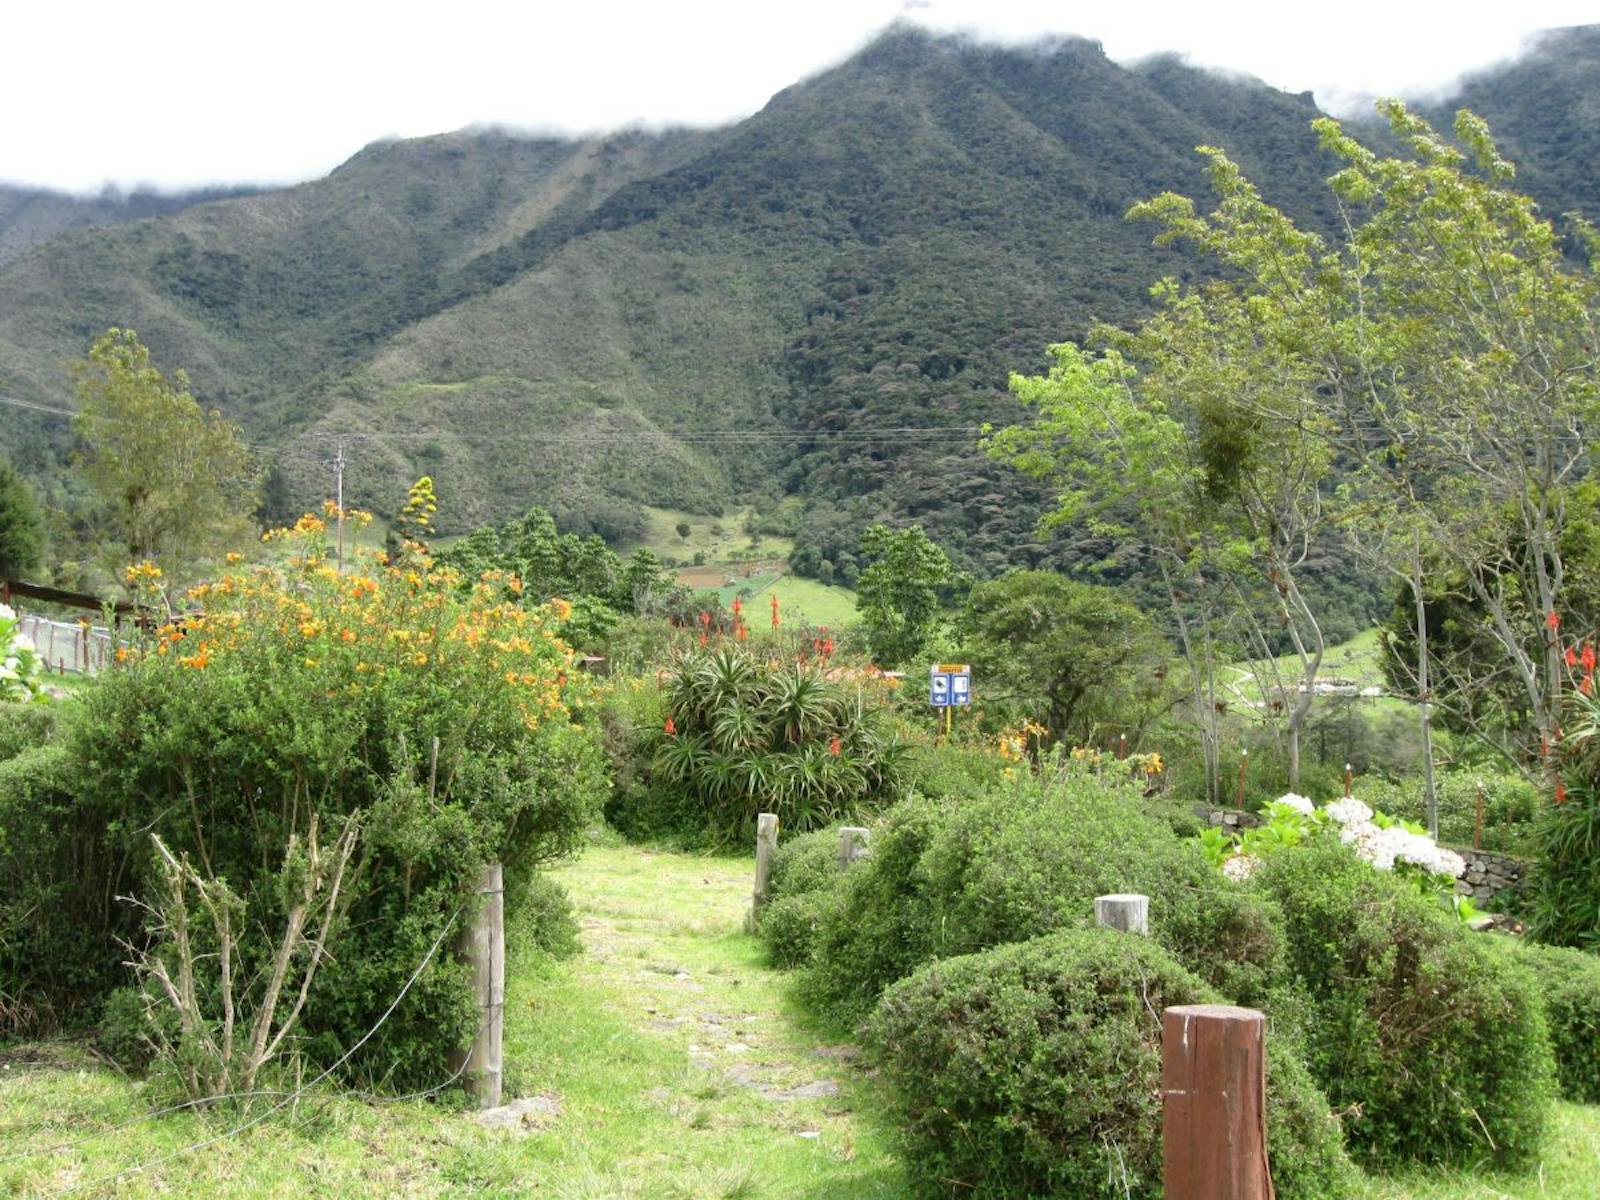 Venezuelan Andes Montane Forests